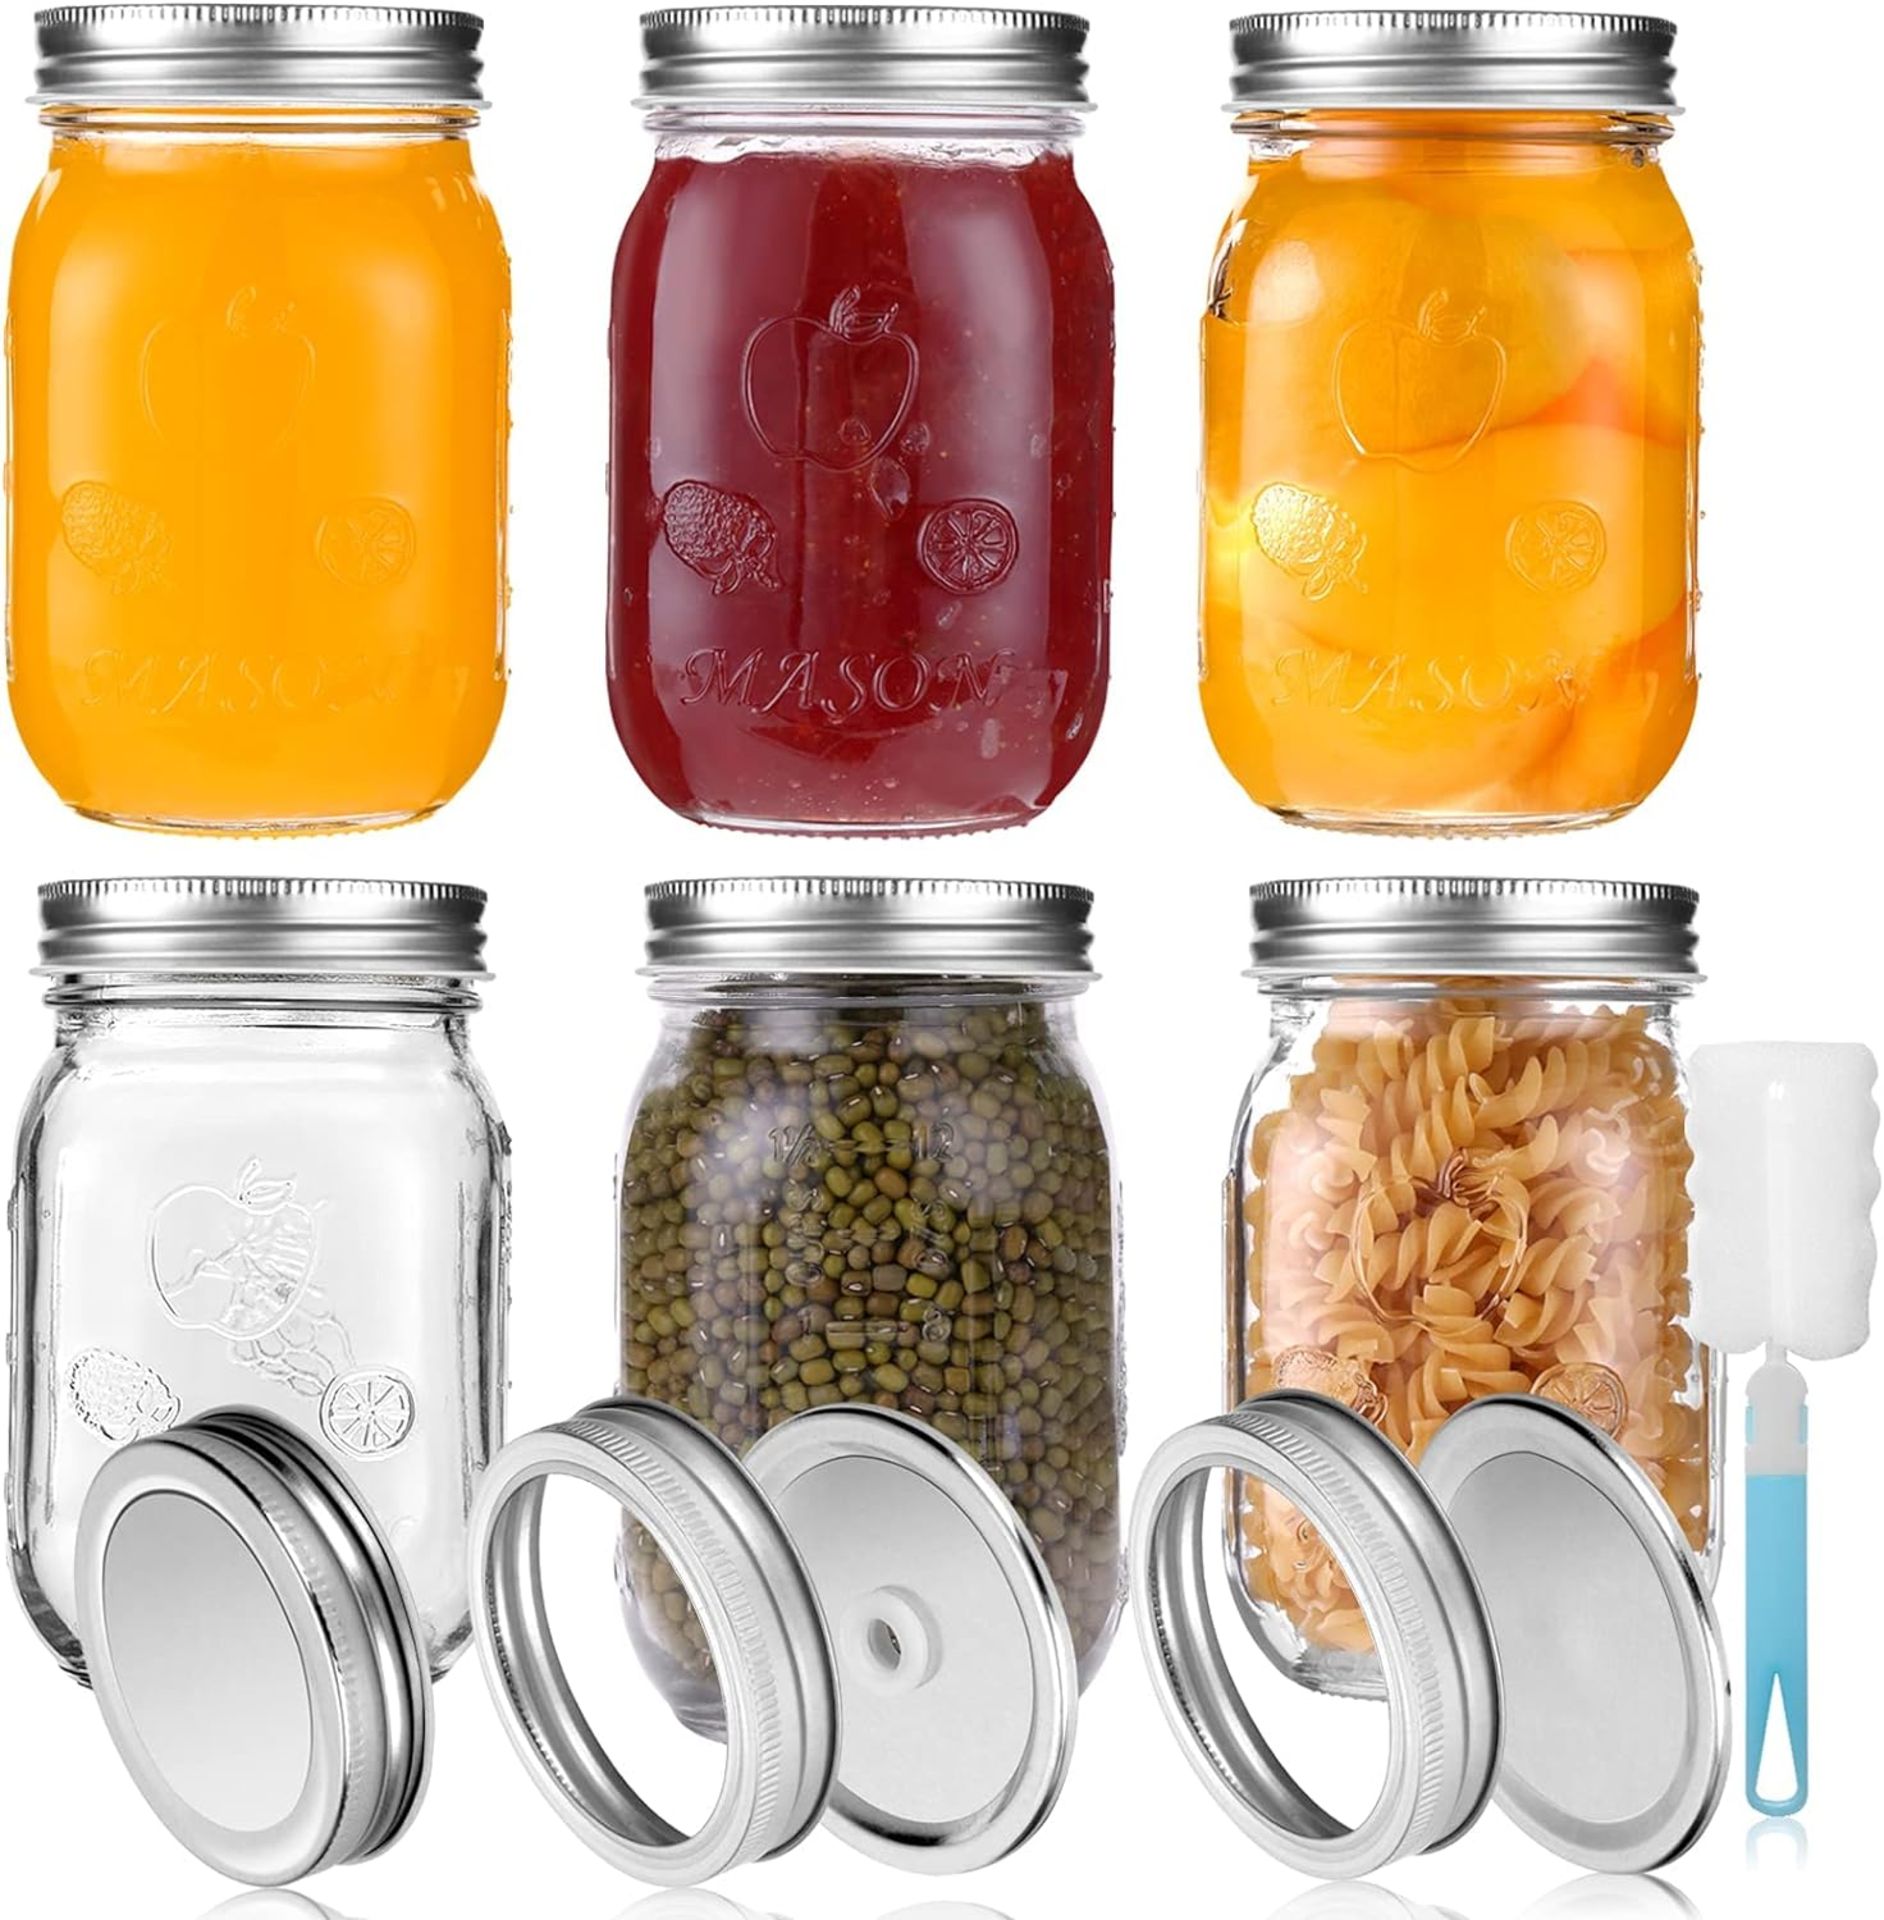 YUEYEE Glass Mason Jars with Lids,Food Storage Jars 16oz / 450ml for Homemade Food Preserving Jam